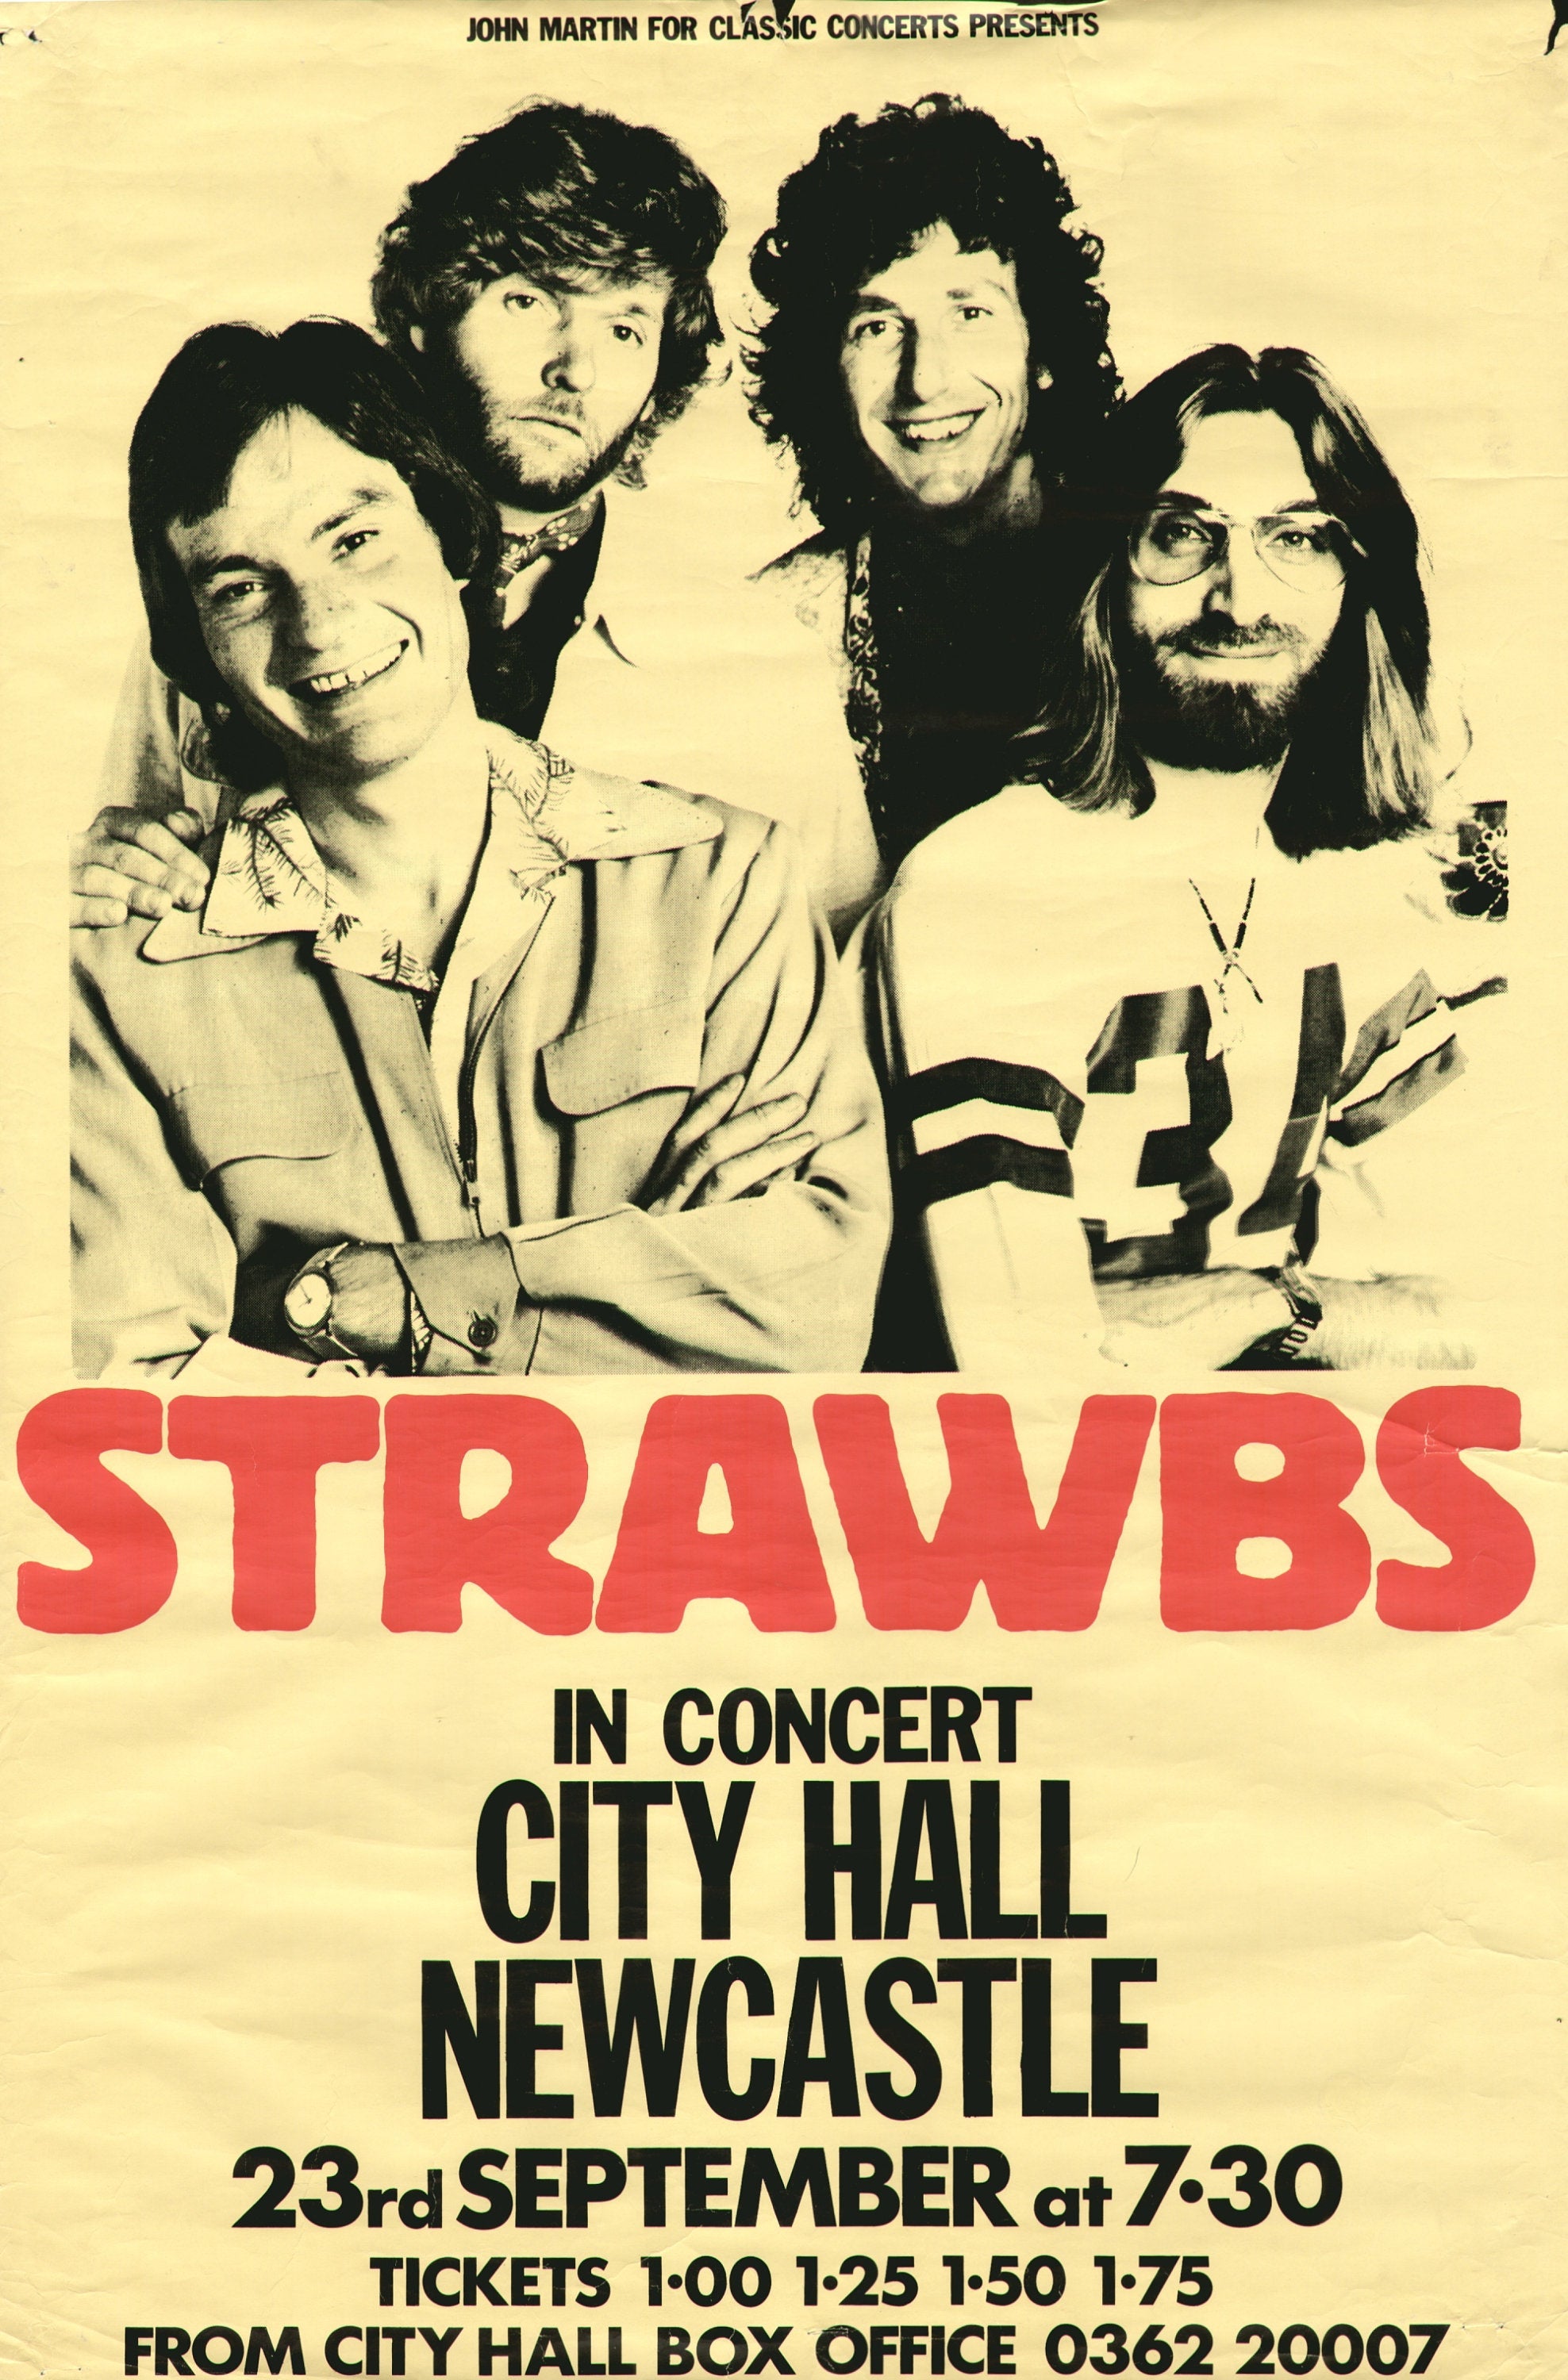 0780 Vintage Music Art Poster - Strawbs City Hall Newcastle